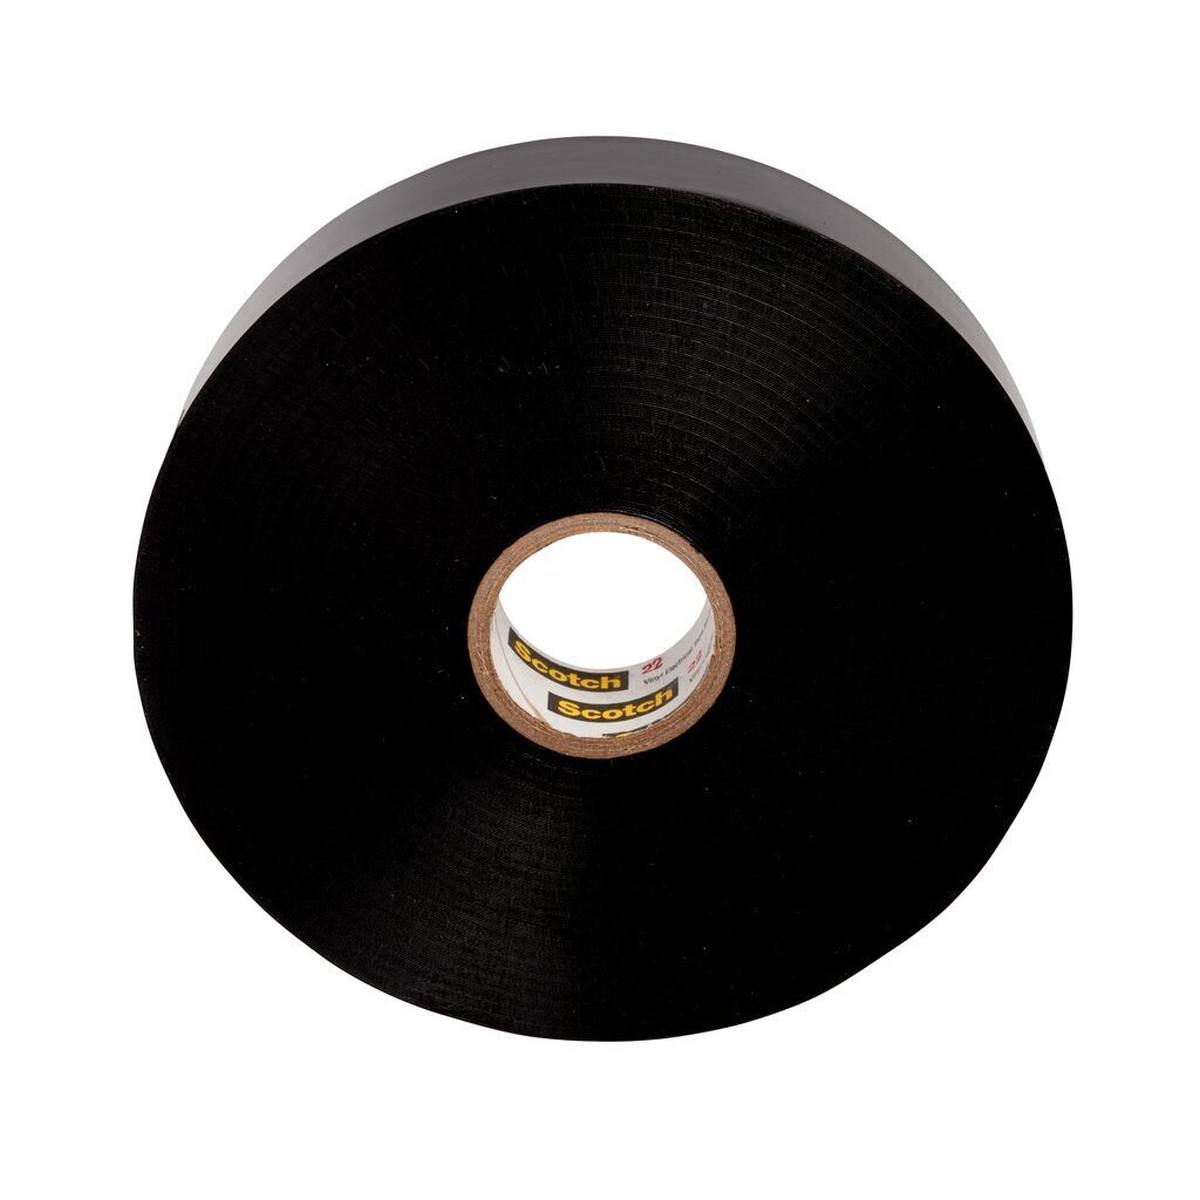 3M Scotch 22 vinyl electrical insulation tape, black, 12 mm x 33 m, 0.25 mm